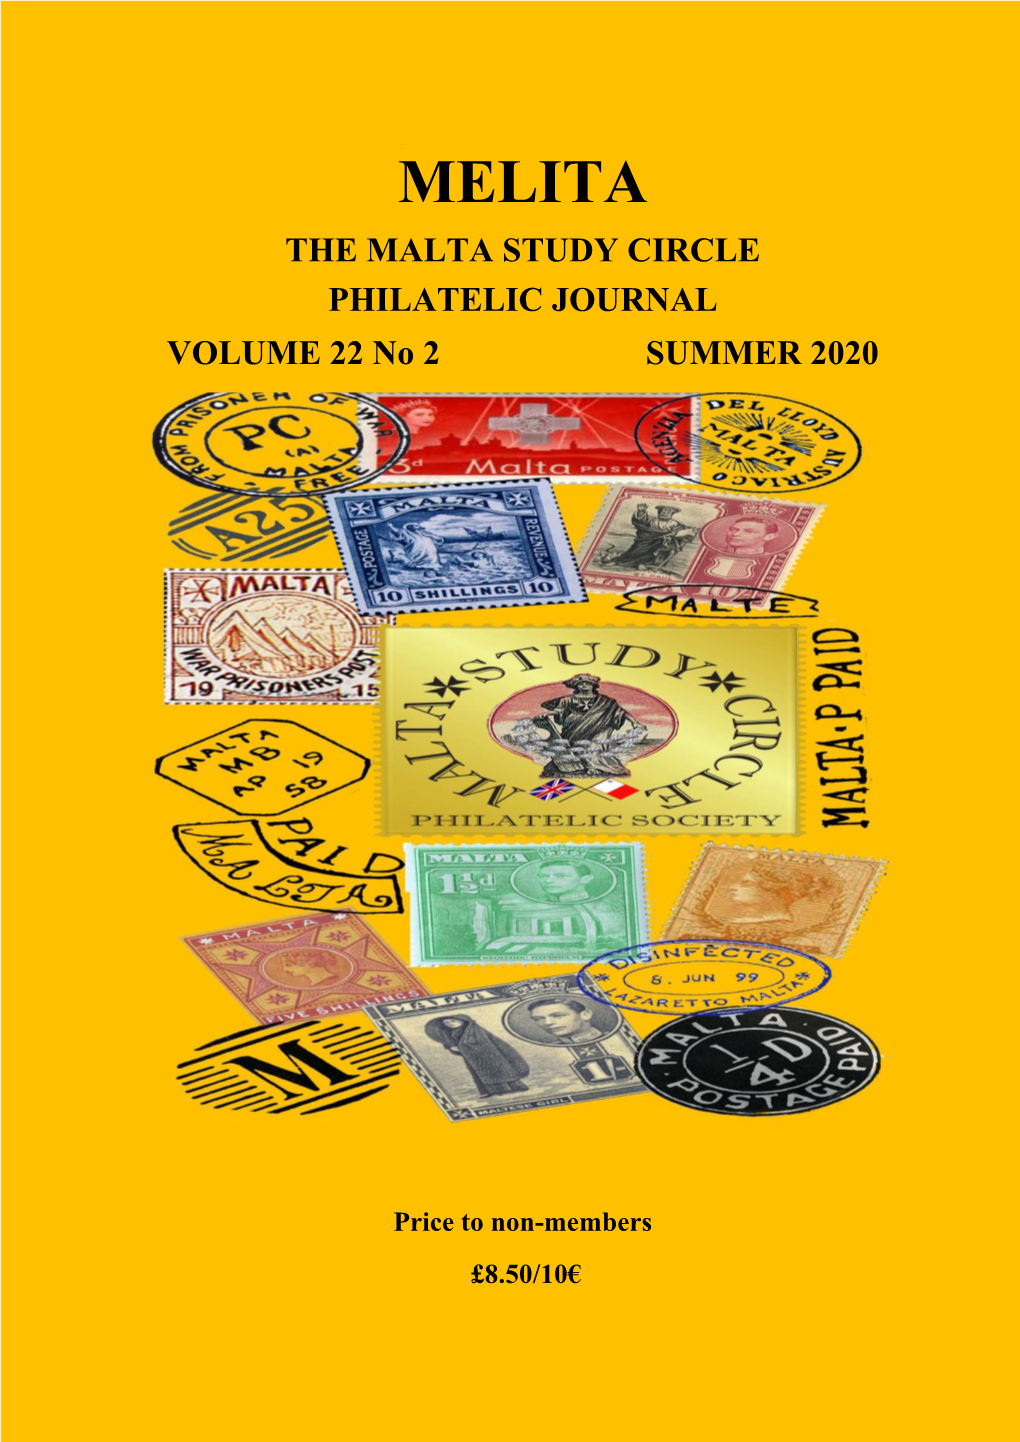 MELITA the MALTA STUDY CIRCLE PHILATELIC JOURNAL VOLUME 22 No 2 SUMMER 2020